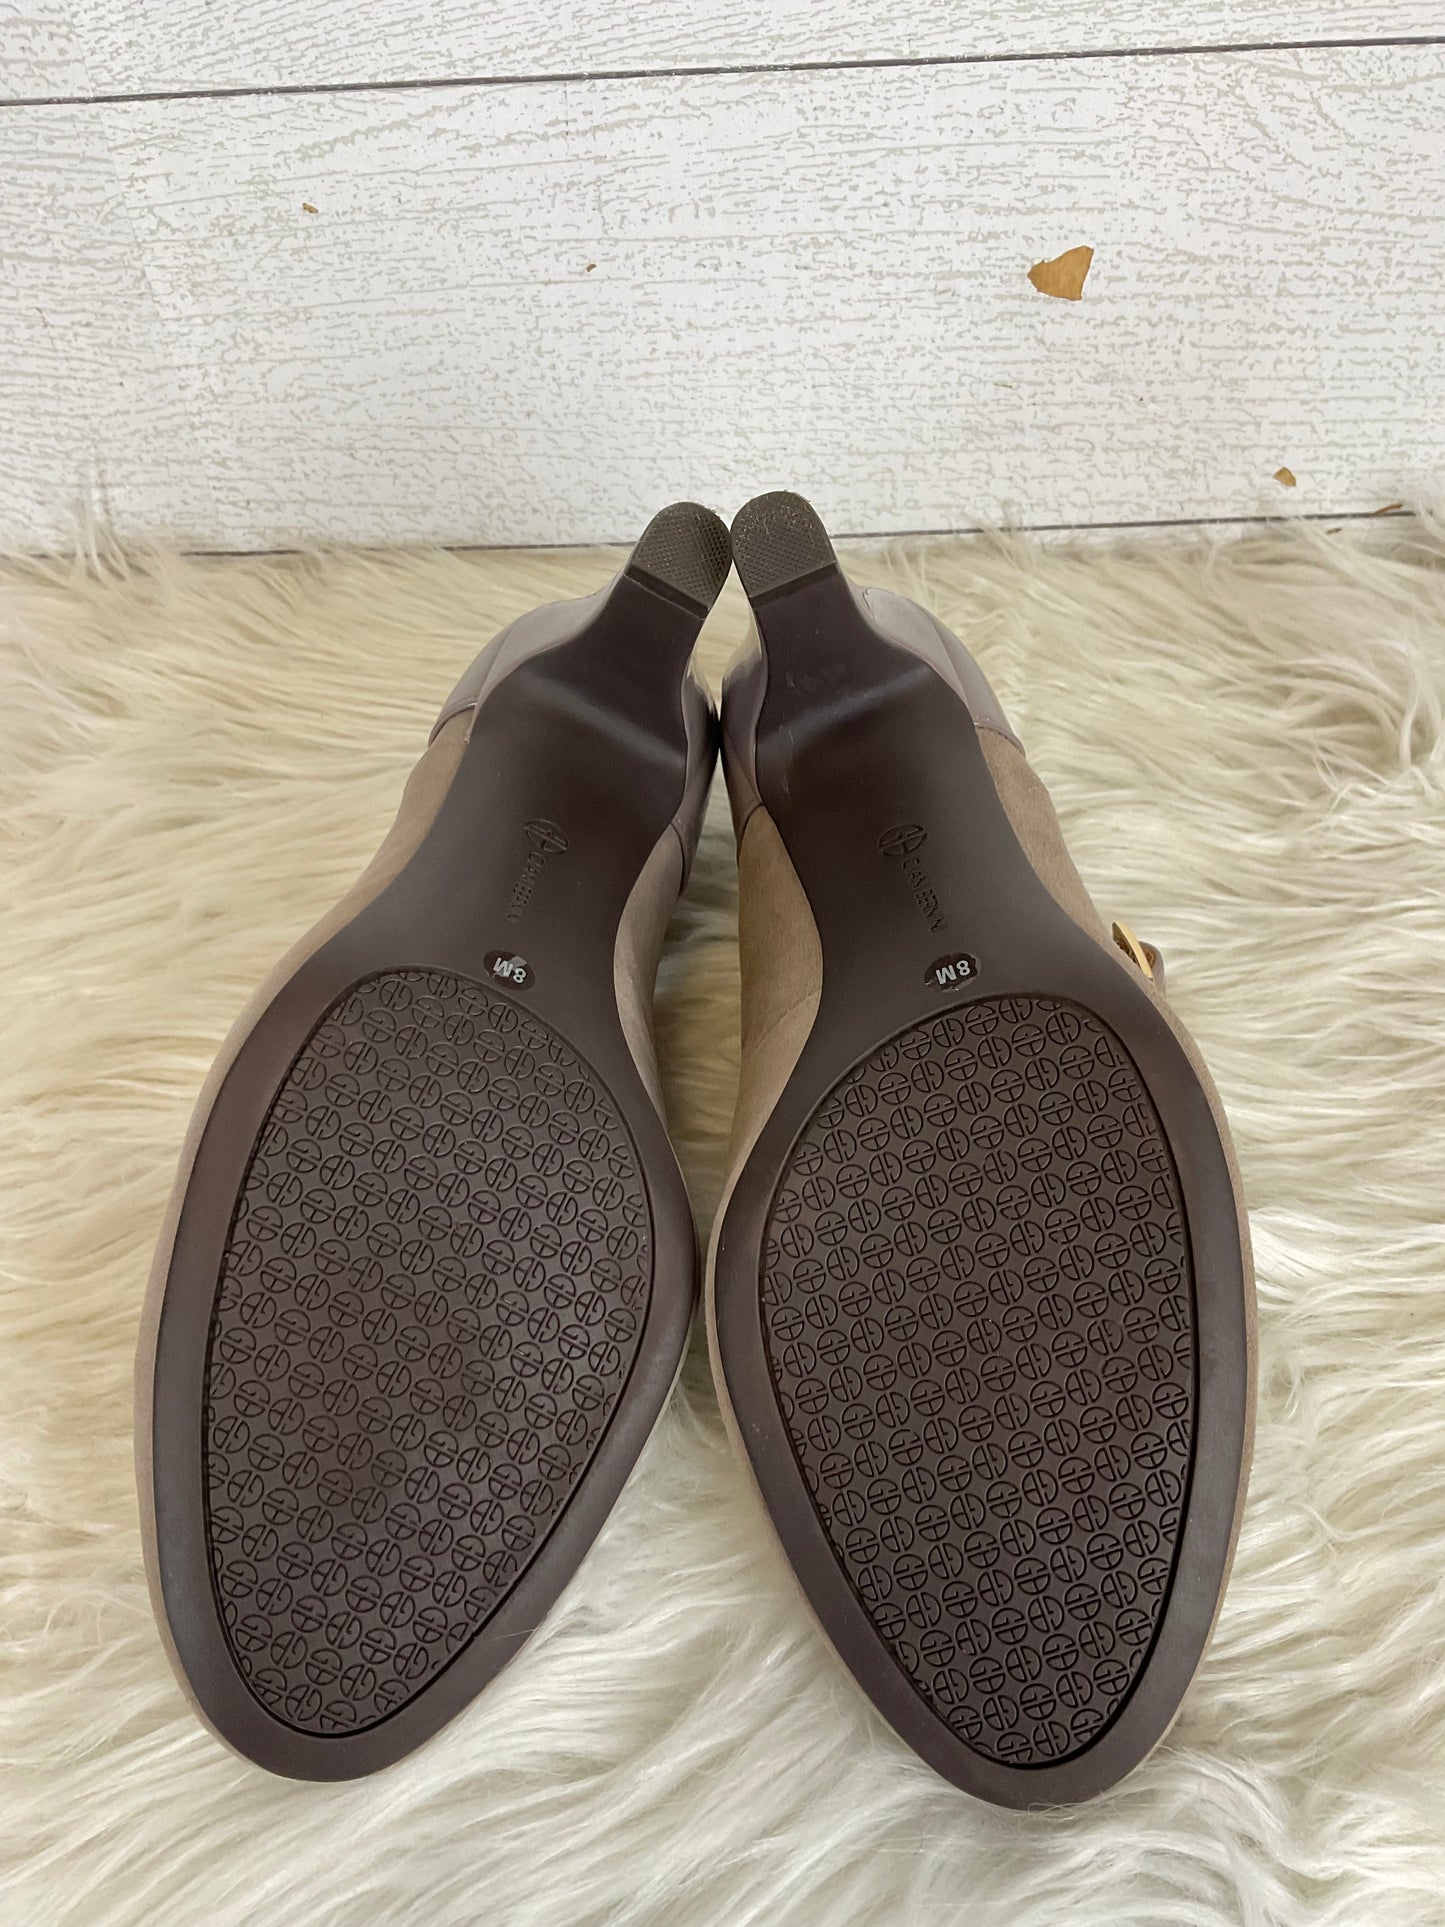 Shoes Heels Stiletto By Giani Bernini  Size: 8